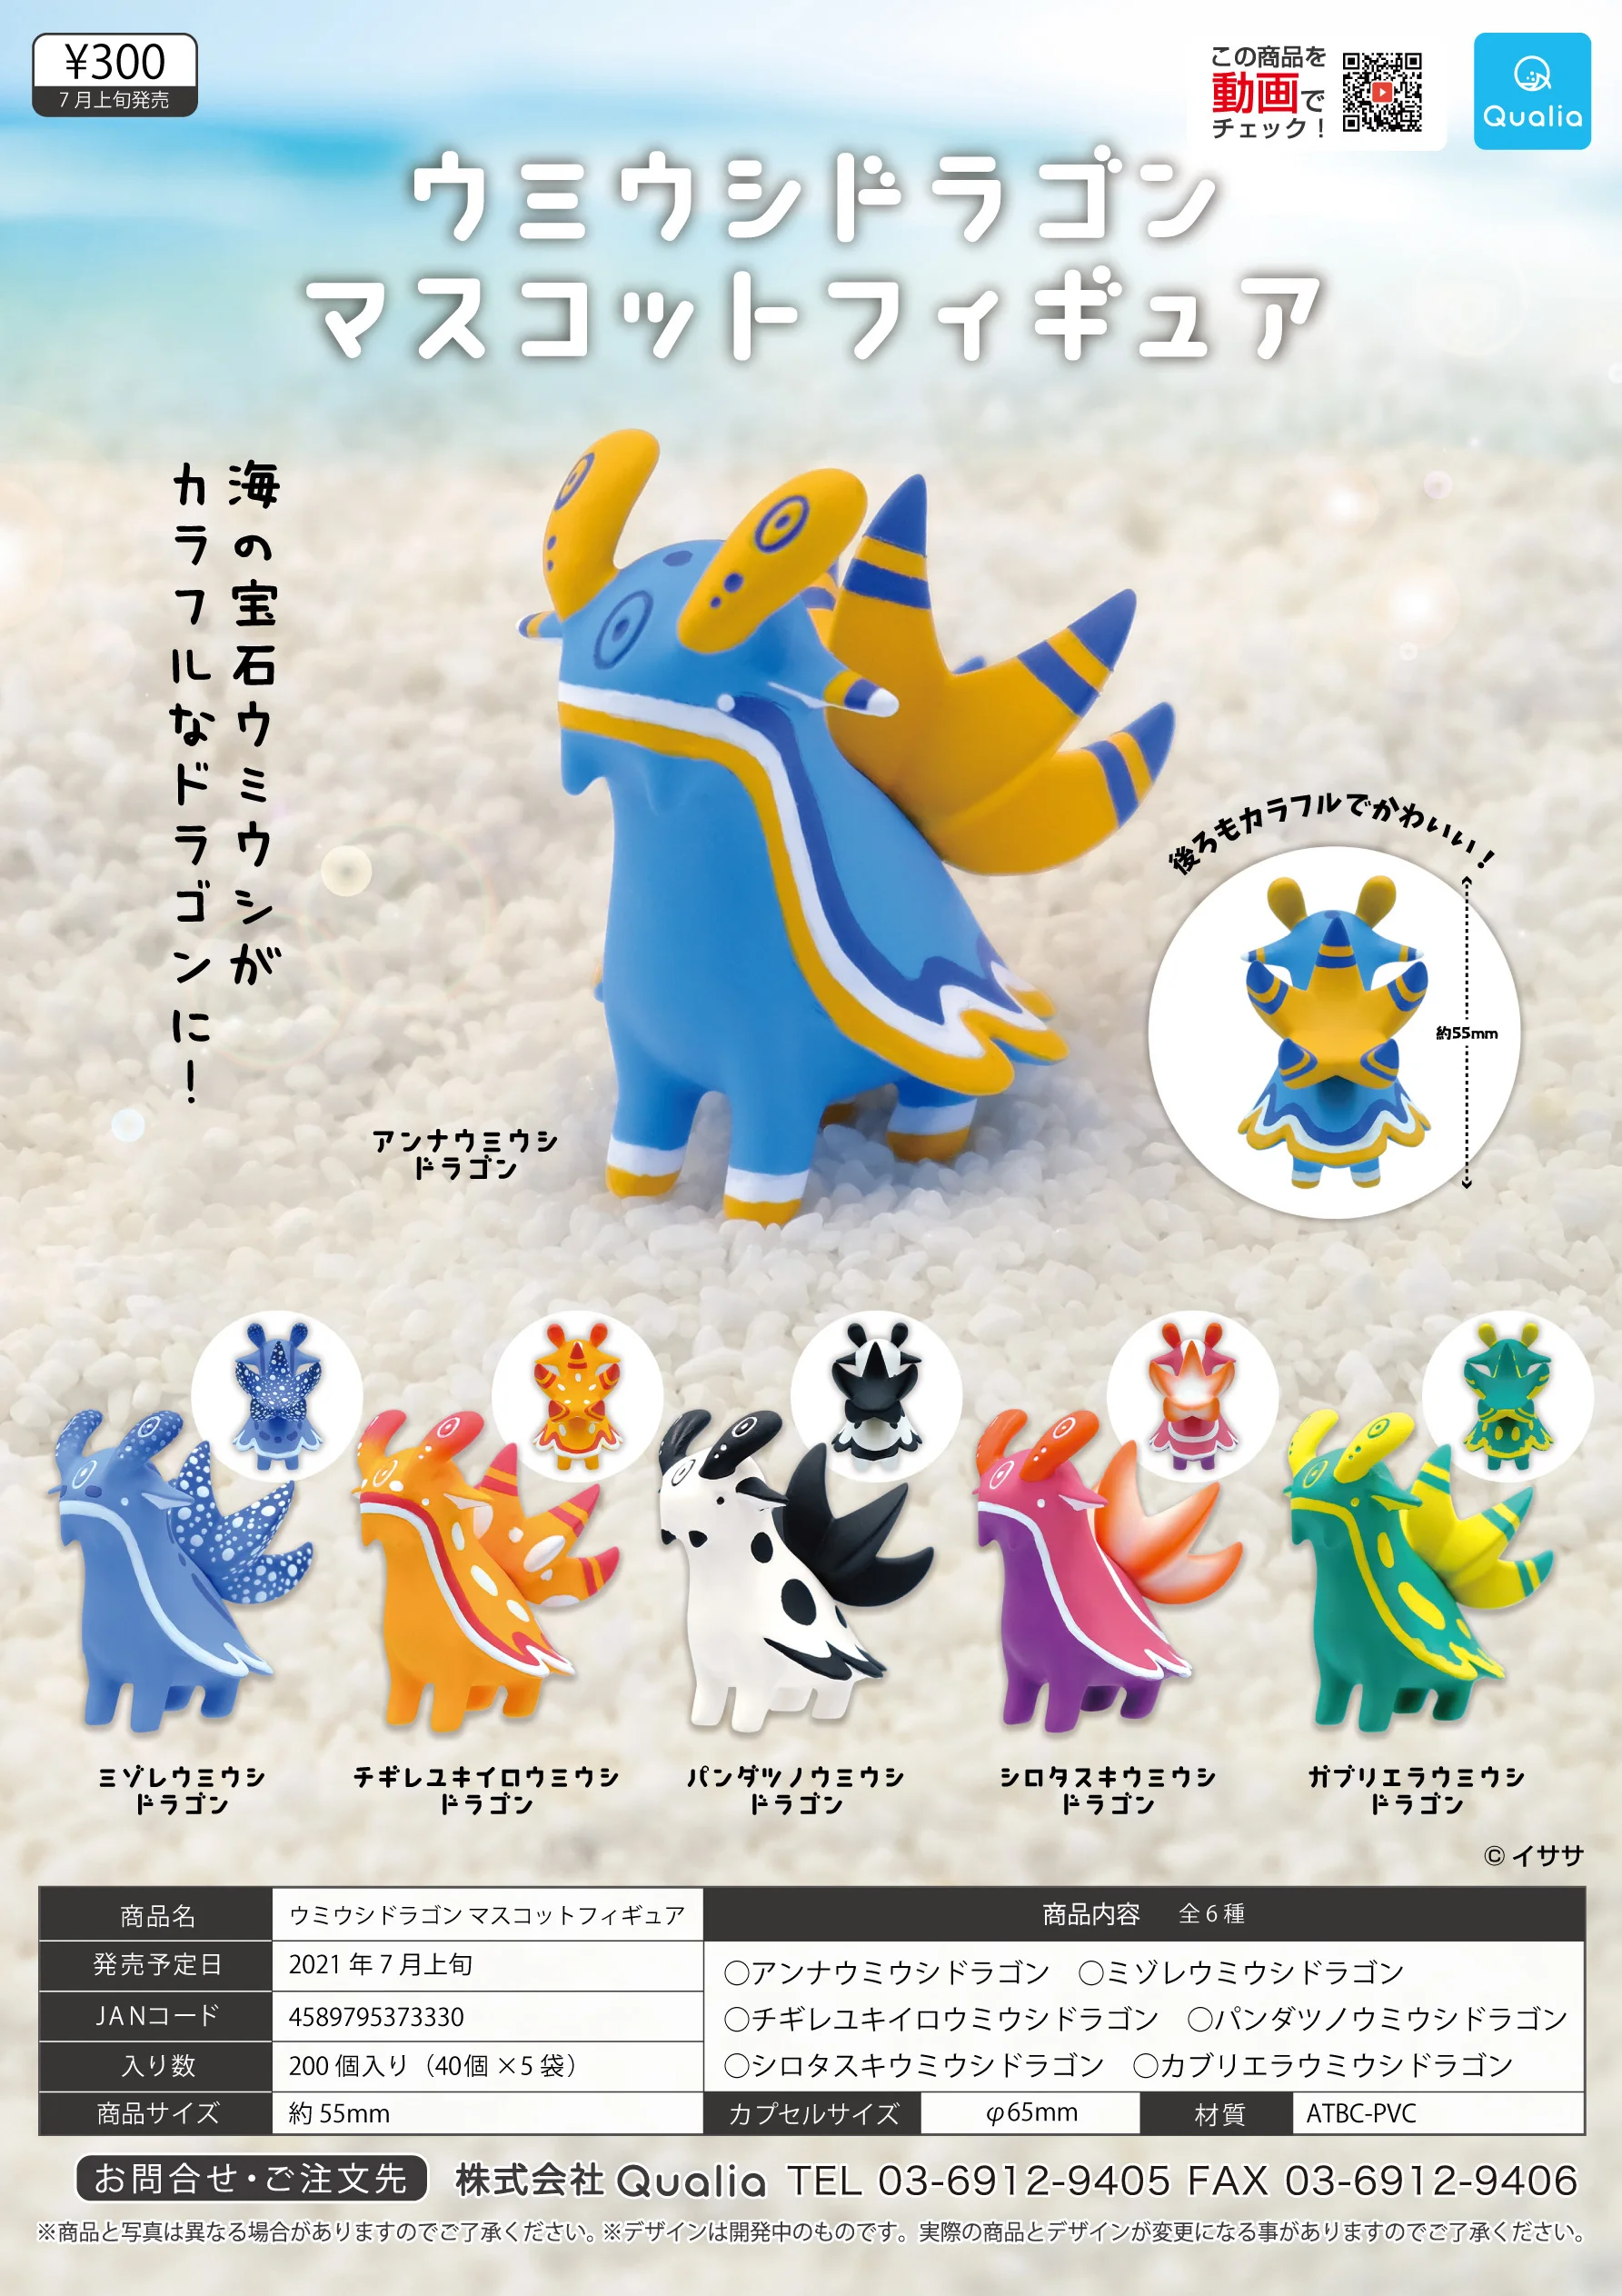 Ocean　Qualia　Play　Decoration　Sea　Slugs　Creatures　Toys　Japan　Collection　Tide　Capsule　Gashapon　Aquatic　Toy　AliExpress